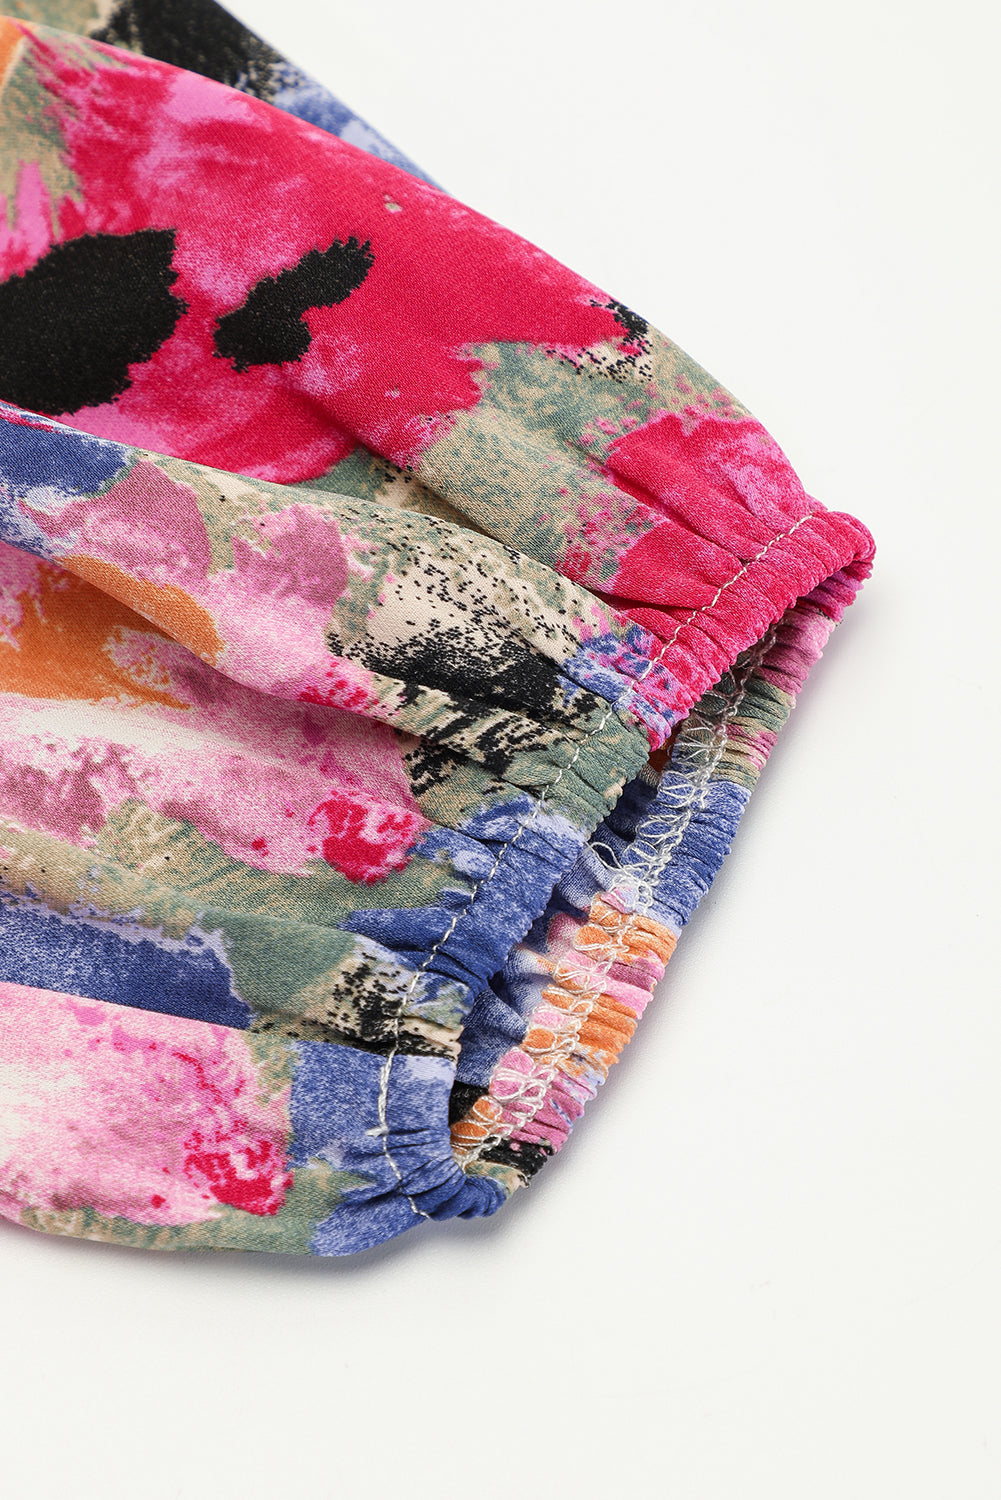 Multicolour Floral Tie Neck Bubble Sleeve Shift Dress - SELFTRITSS